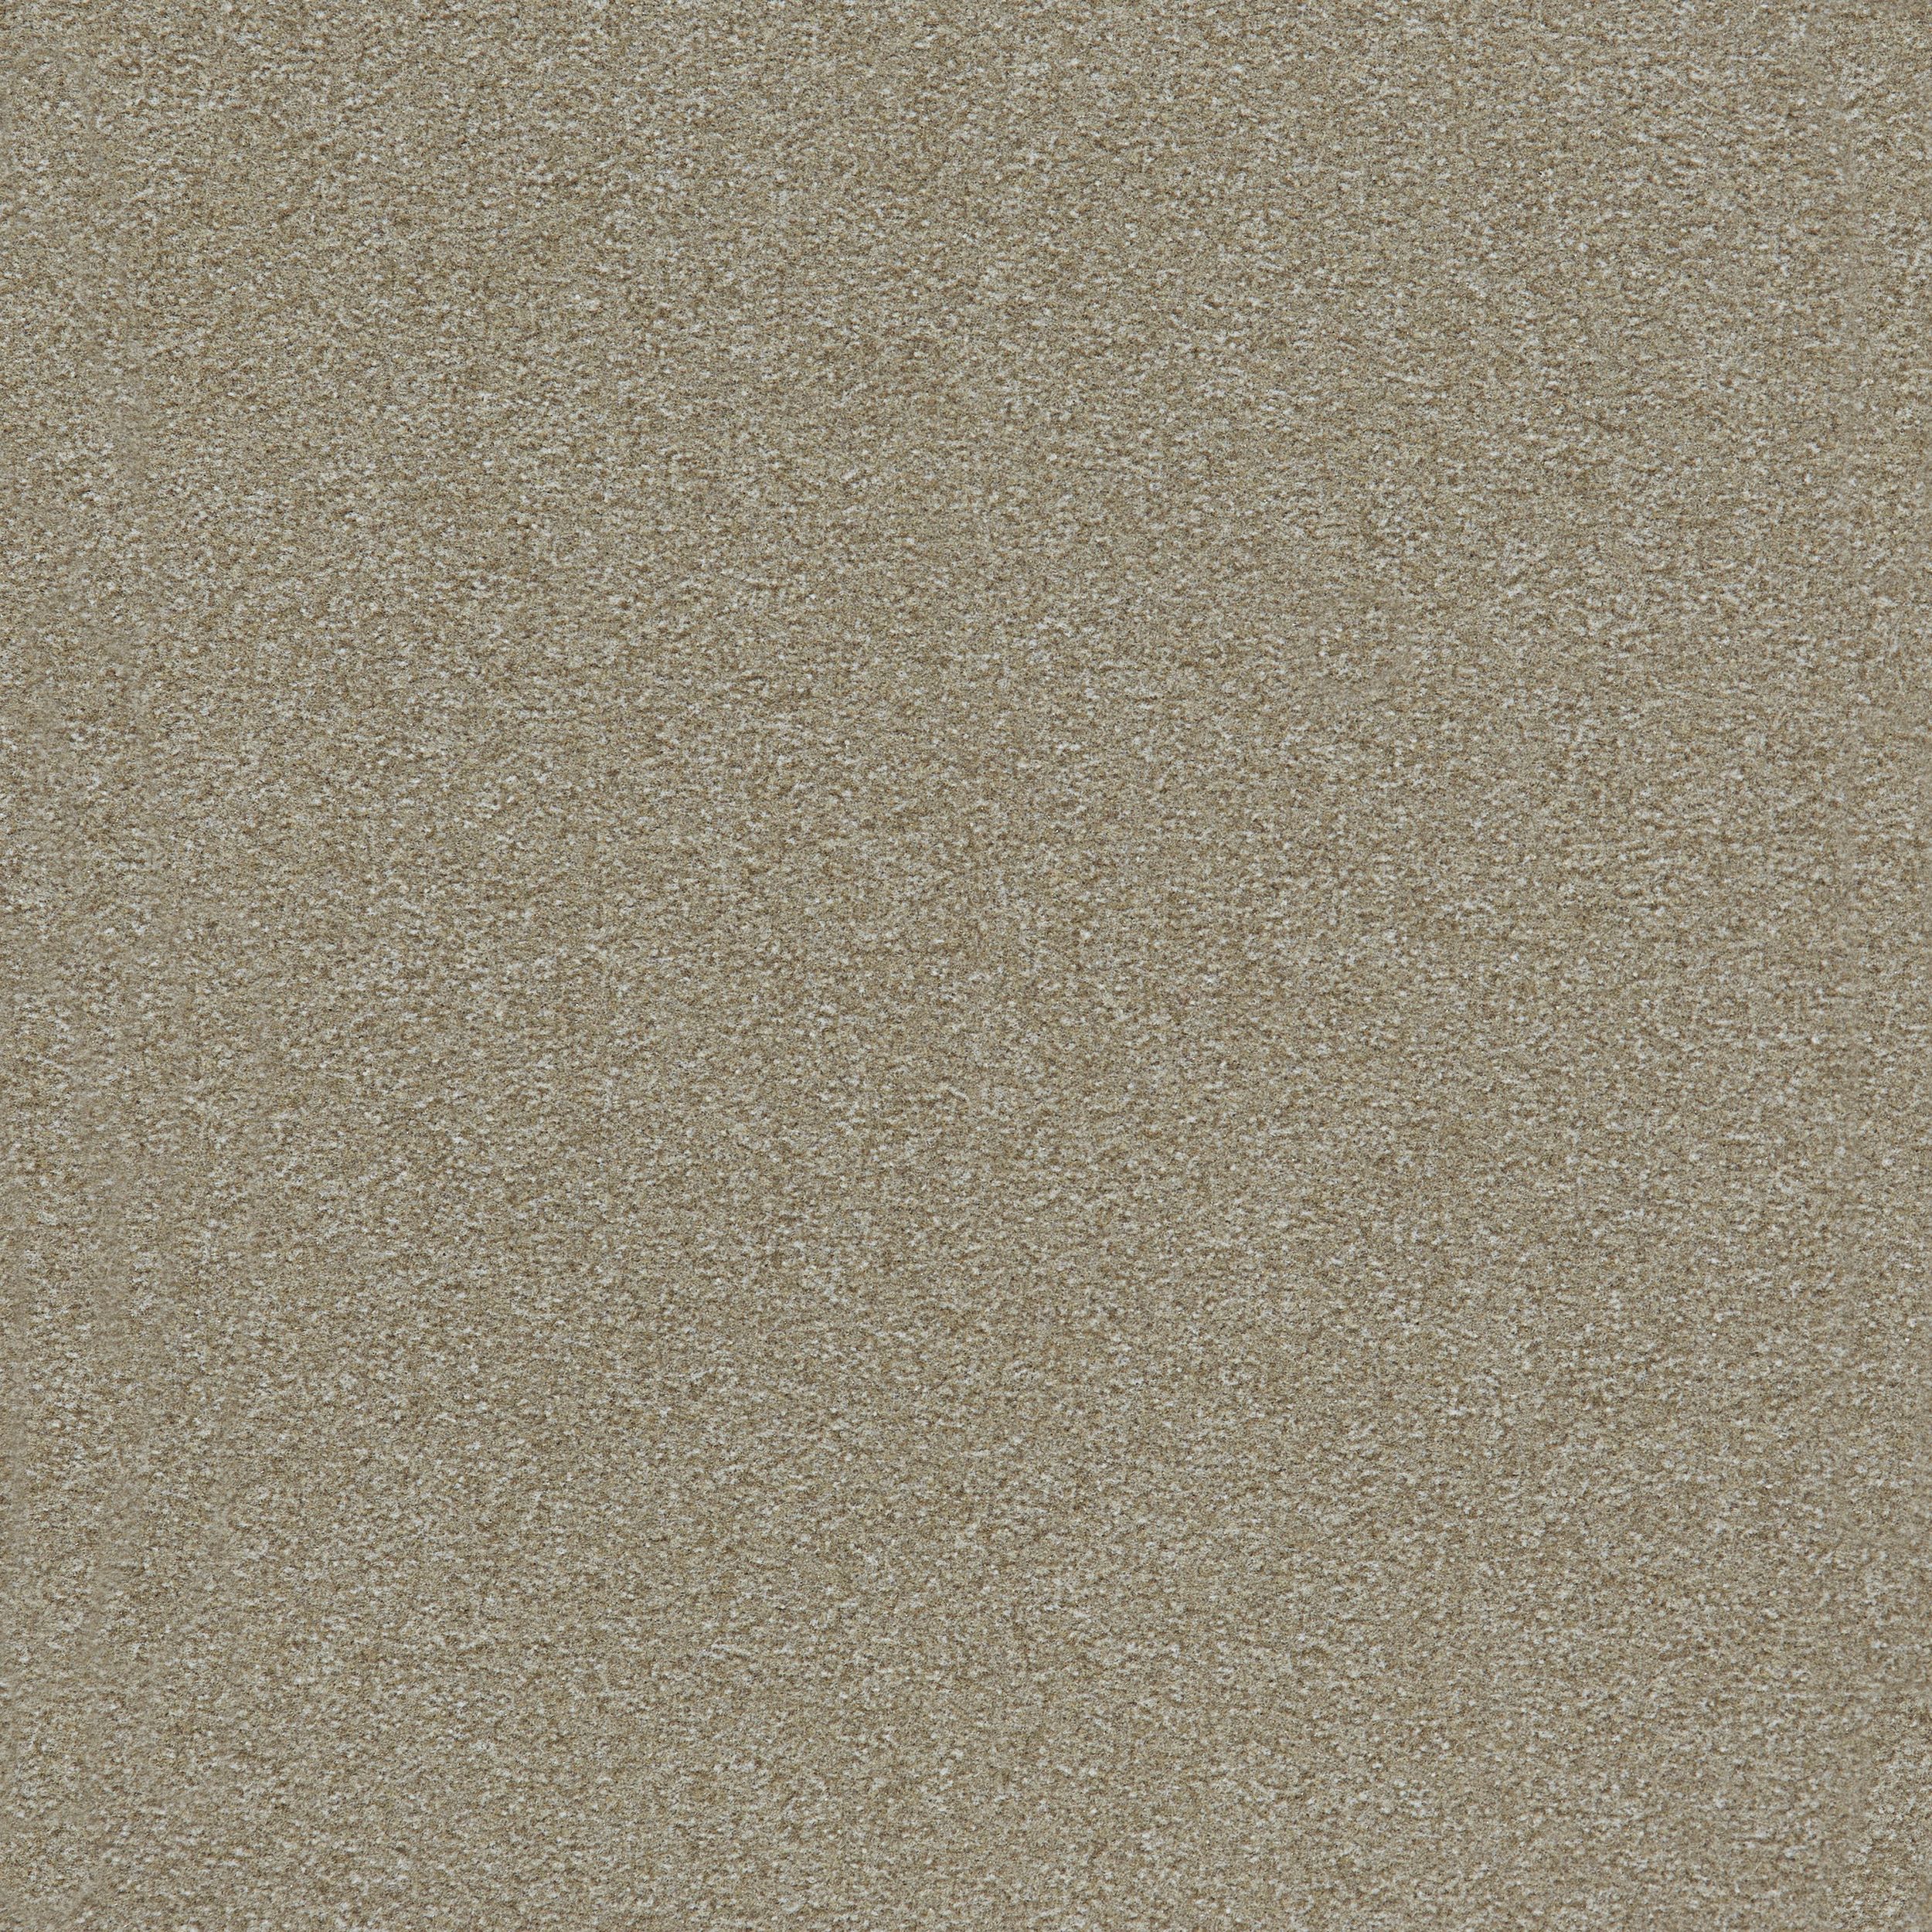 Heuga 725 Carpet Tile In Oyster afbeeldingnummer 8